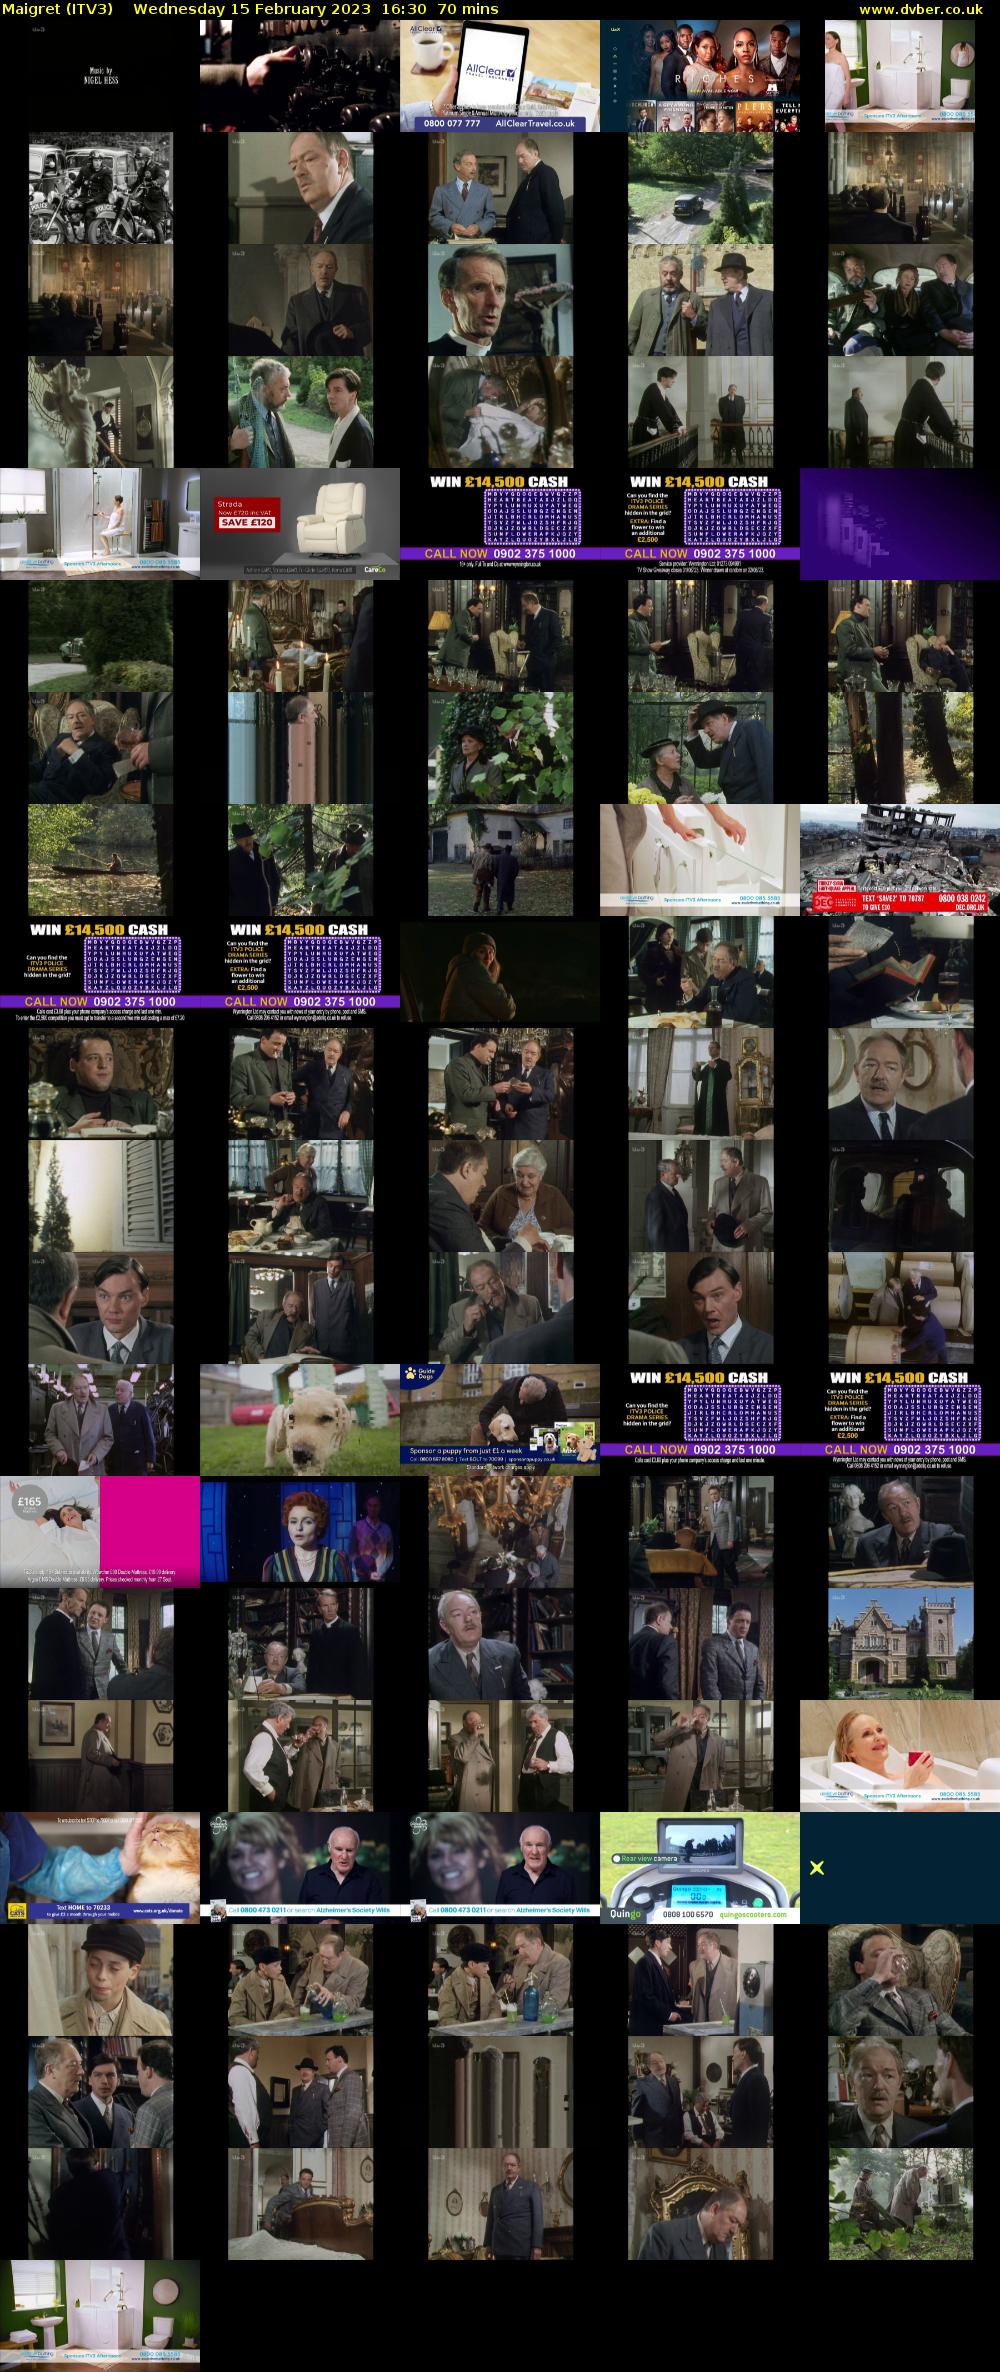 Maigret (ITV3) Wednesday 15 February 2023 16:30 - 17:40